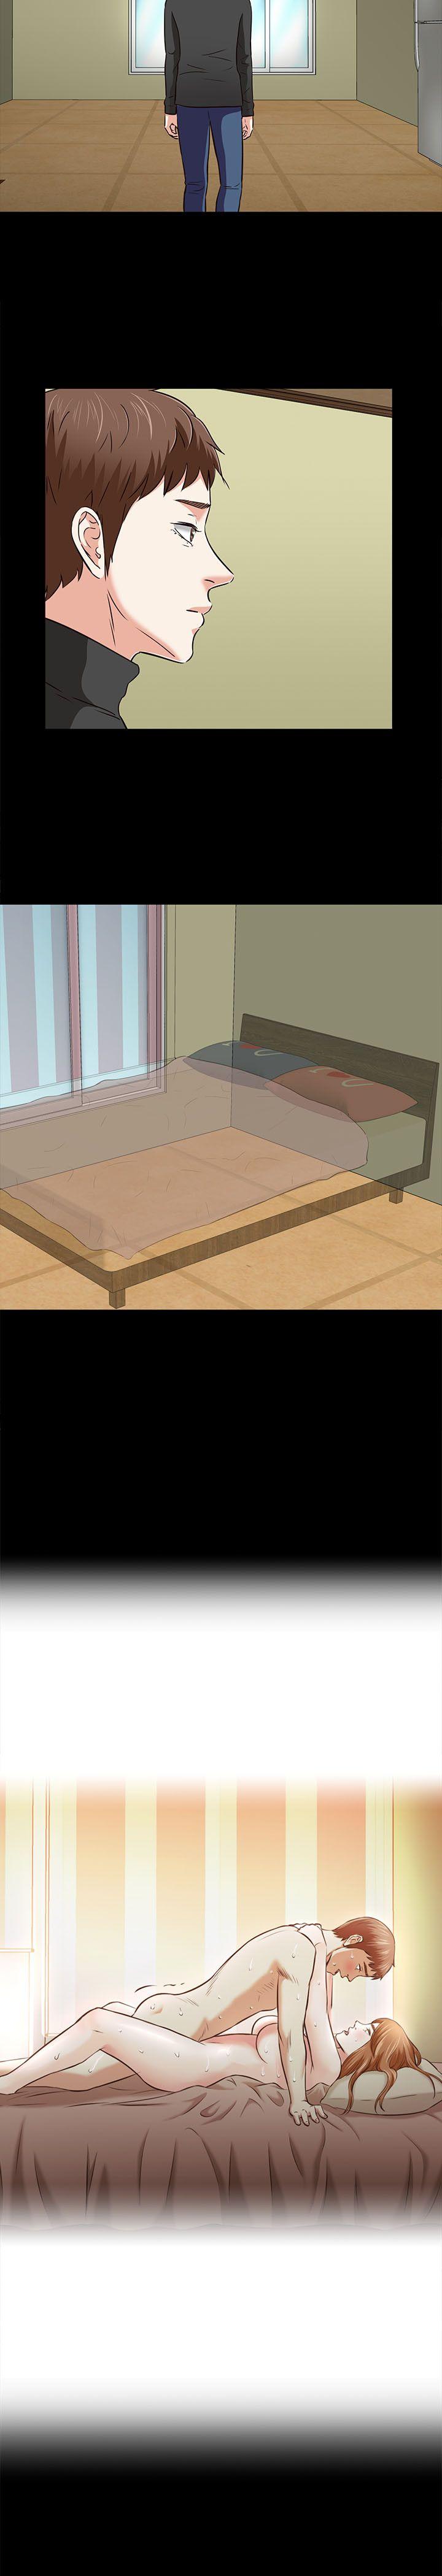 Roommate  第1季最终话 漫画图片26.jpg